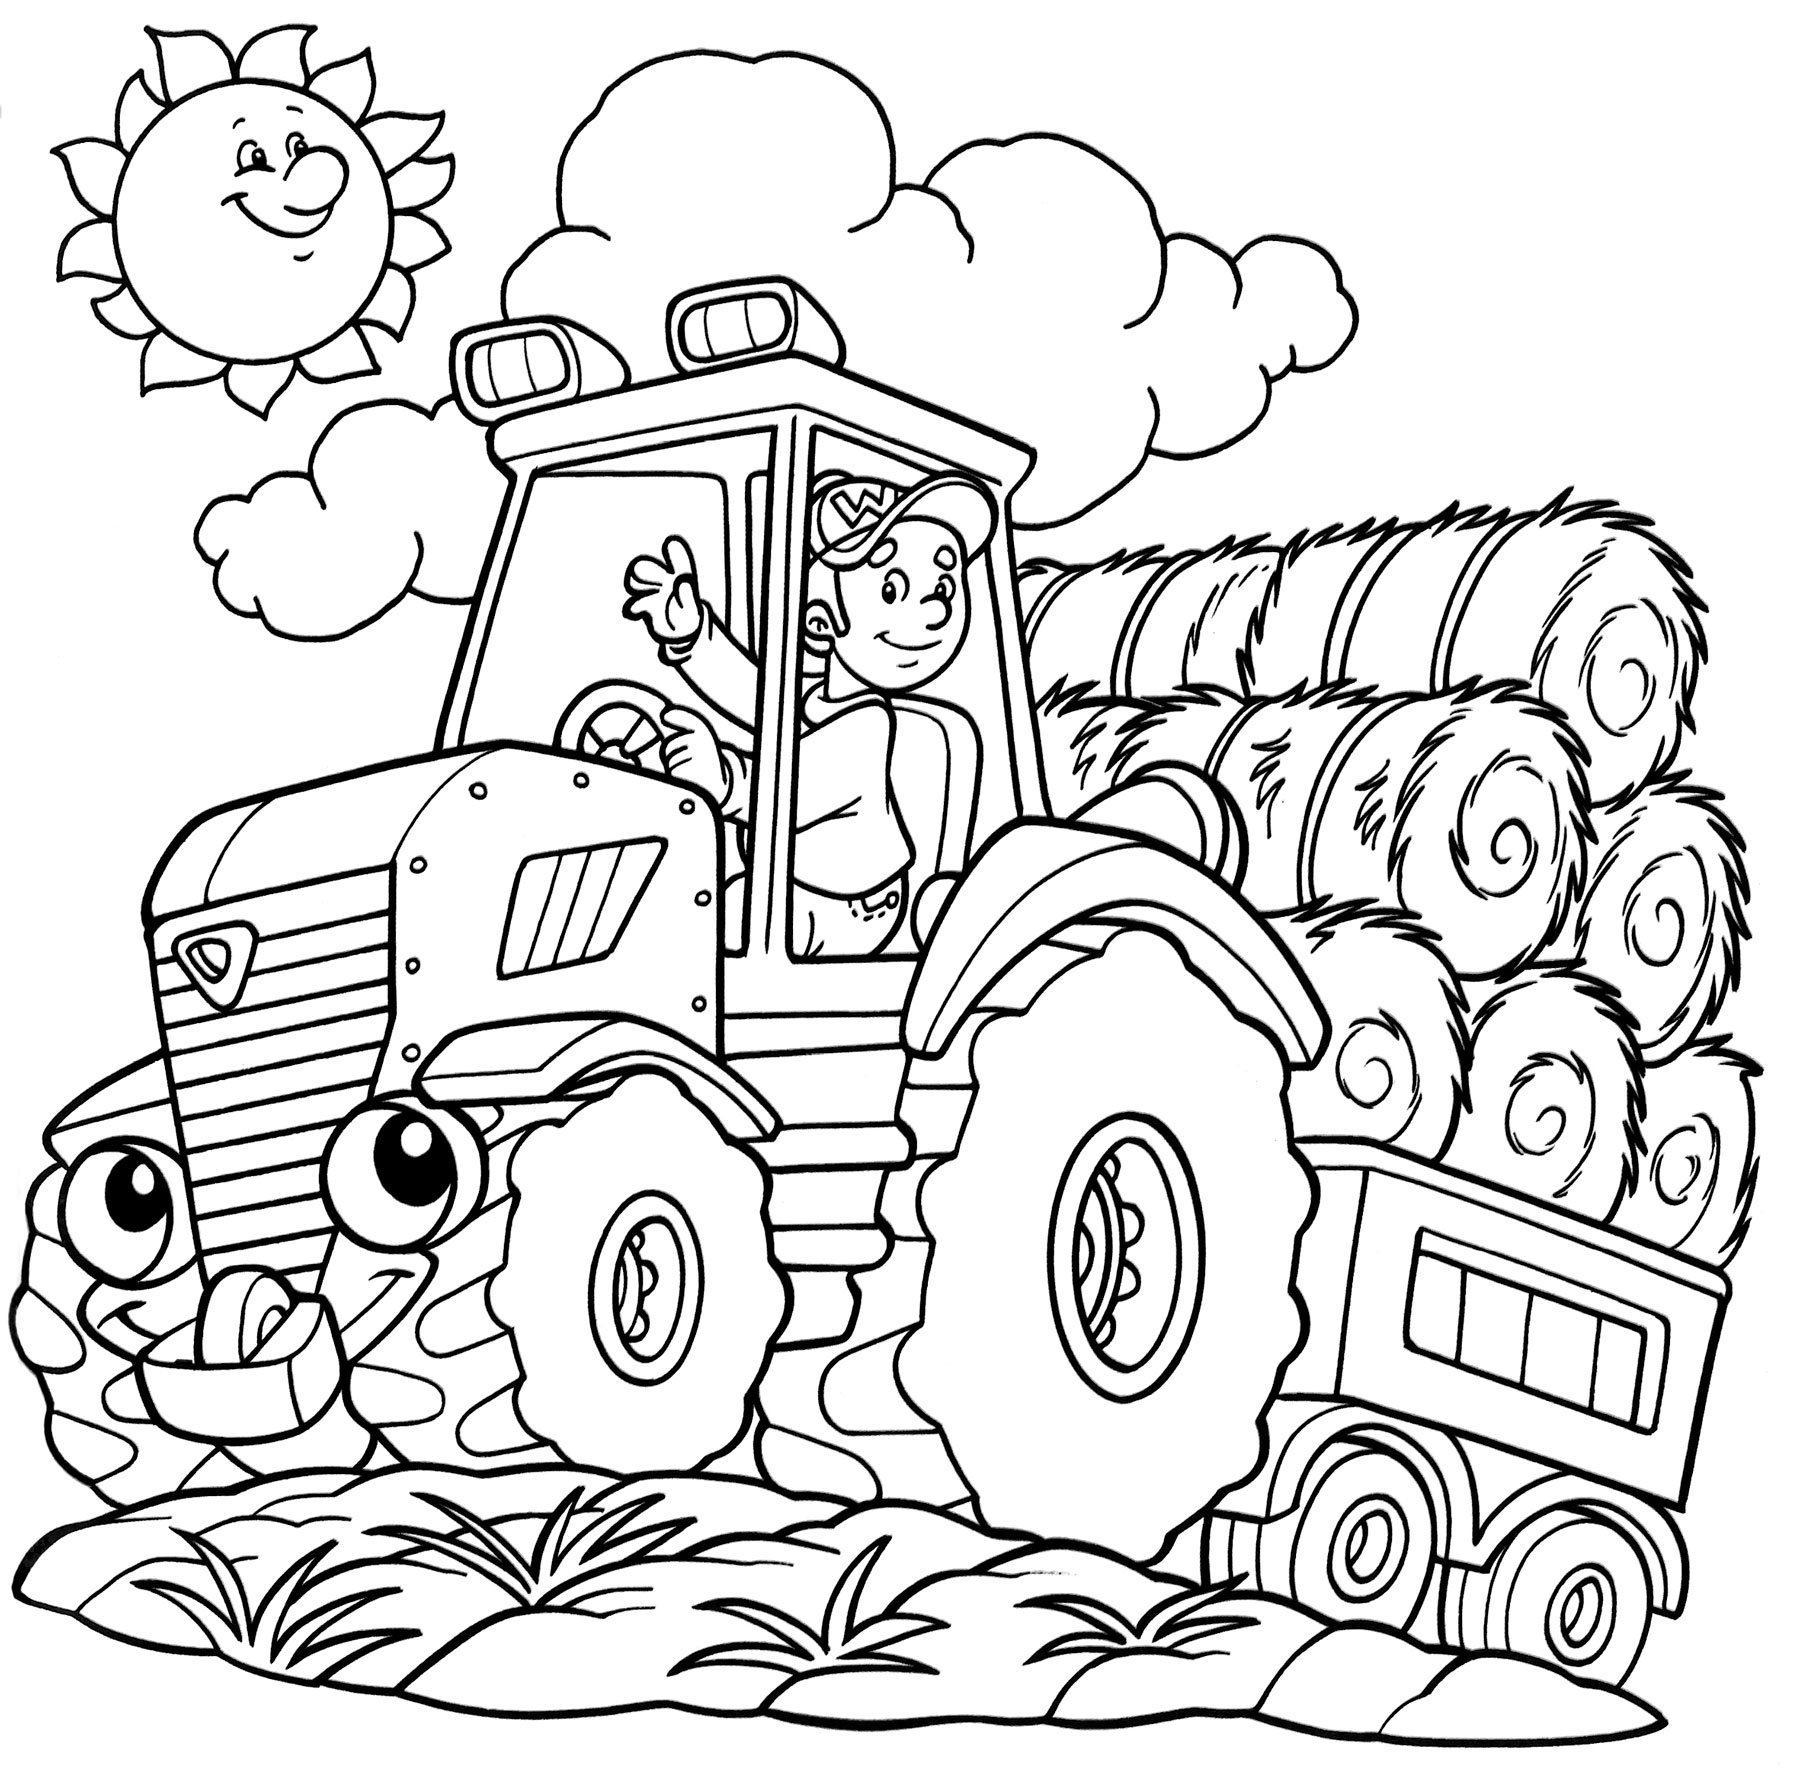 Трактор раскраска для детей 7 лет. Раскраска трактор. Раскраска для малышей. Трактор. Раскраски для мальчиков трактор. Раскраска машинки трактор.